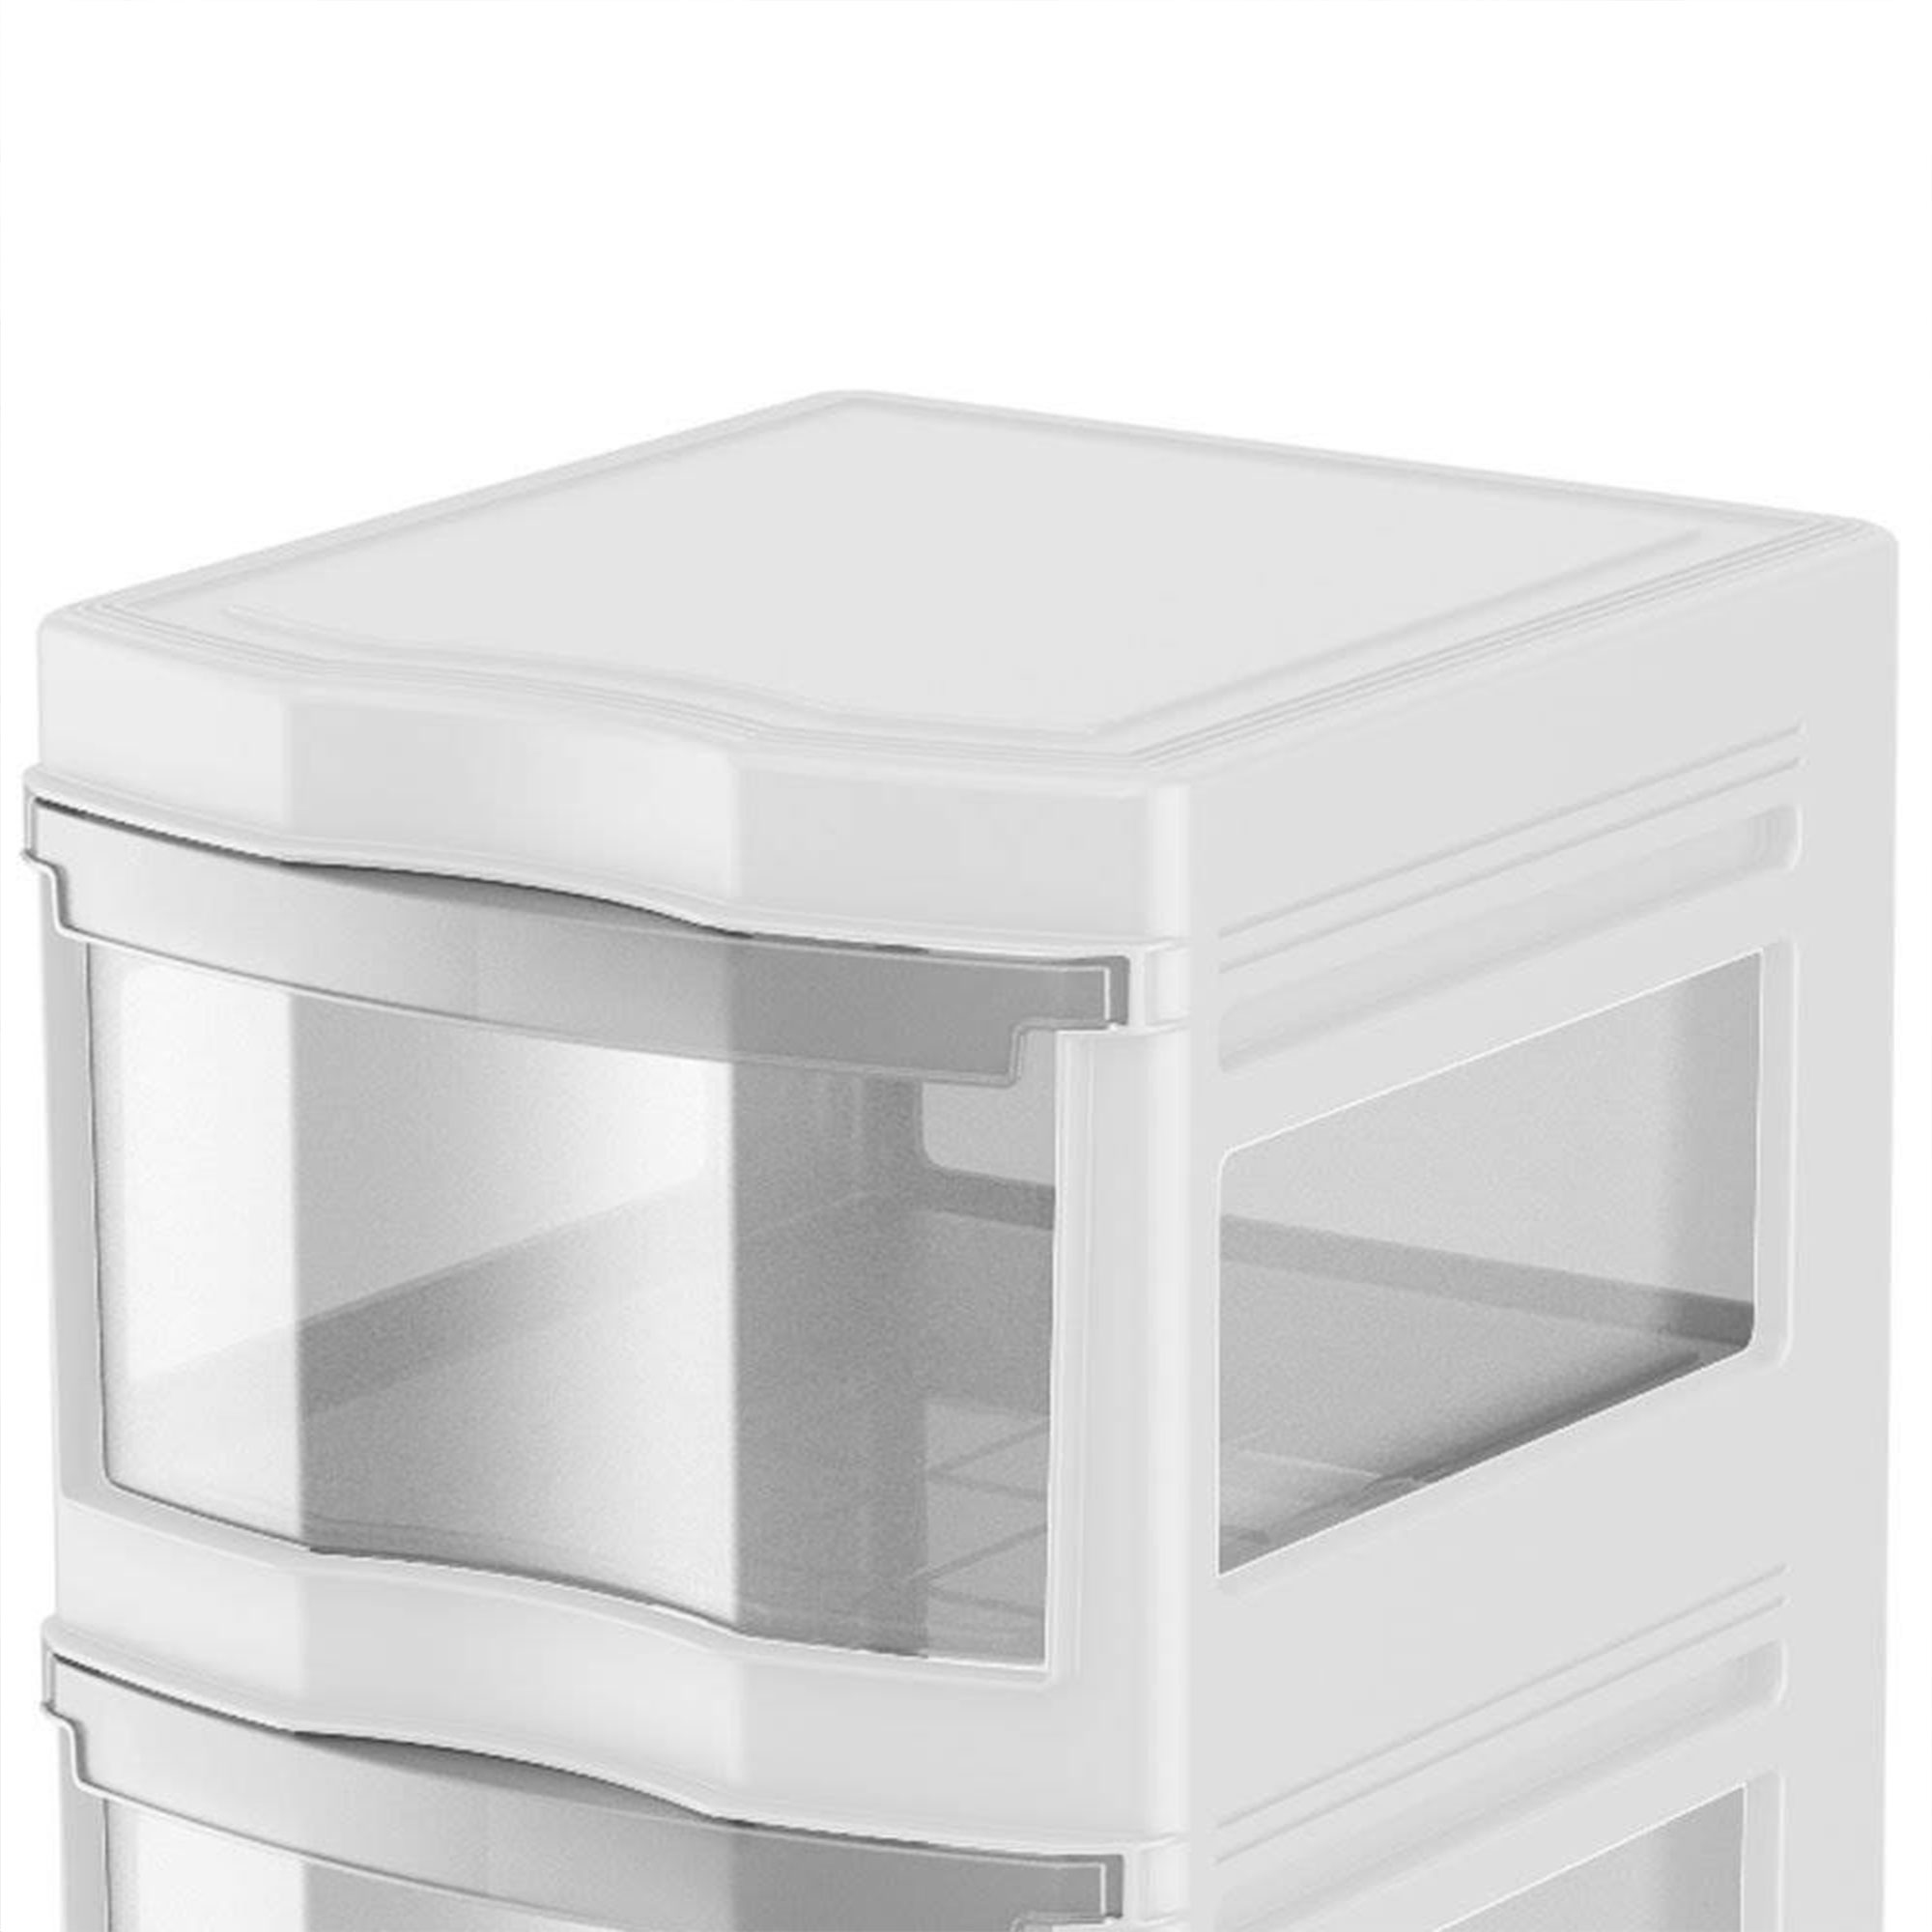 Life Story Classic White 3 Shelf Storage Container Organizer Plastic Drawers - image 2 of 7